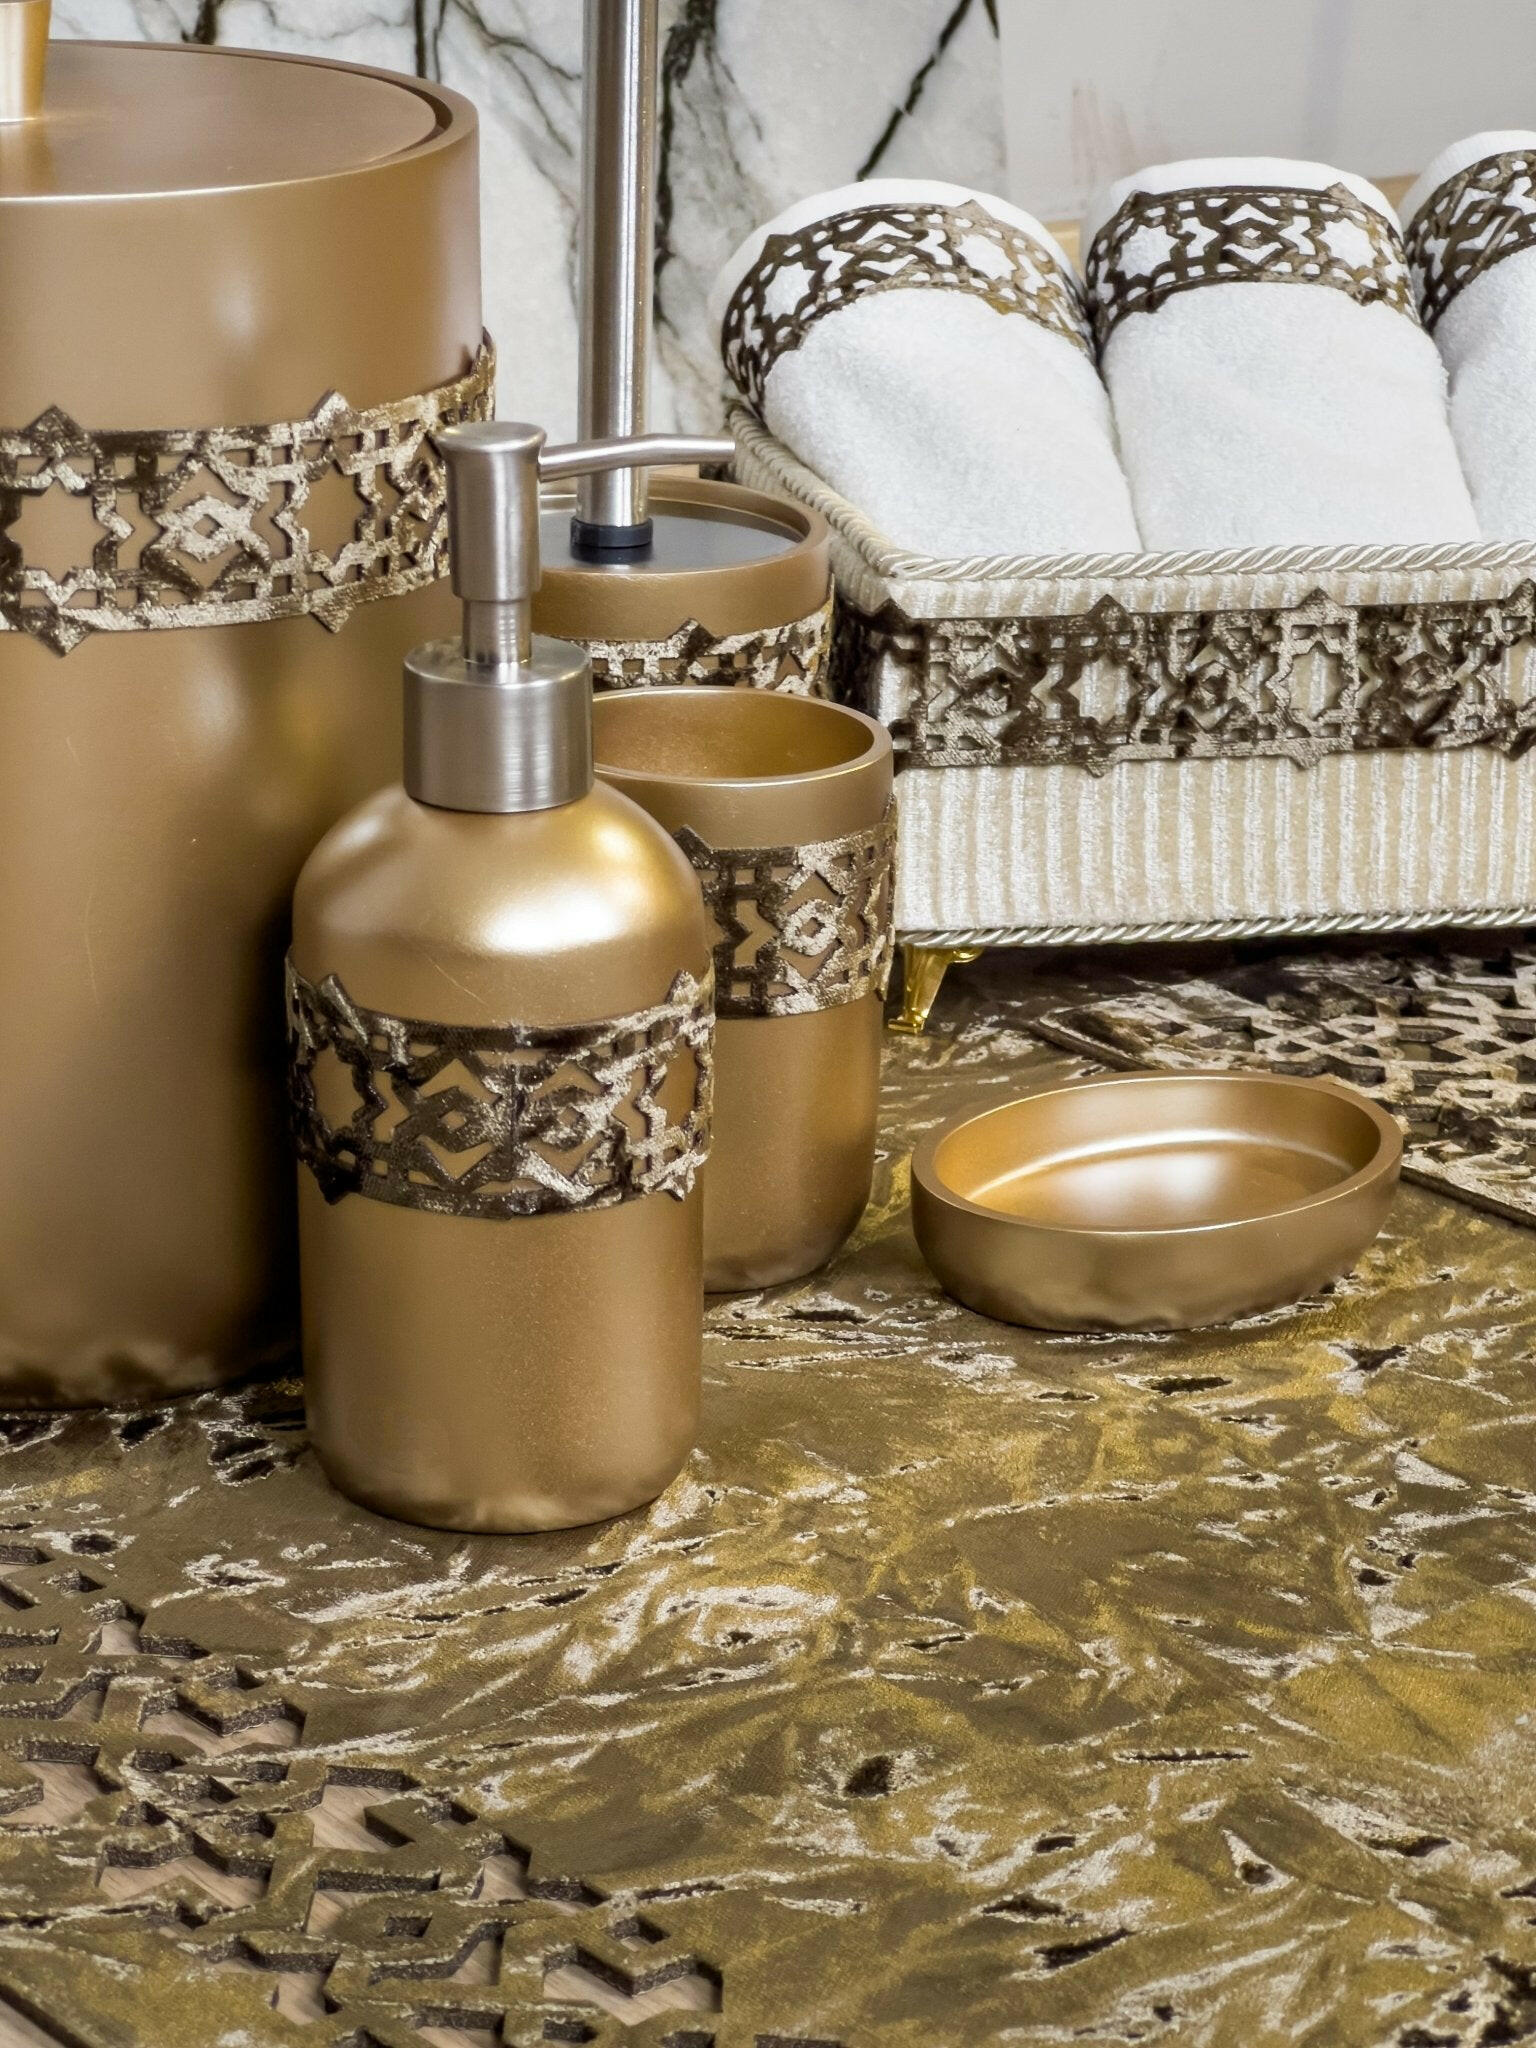 Ottoman Exclusive Coffee Bathroom Set - Creative HomeBathroom Accessory Sets